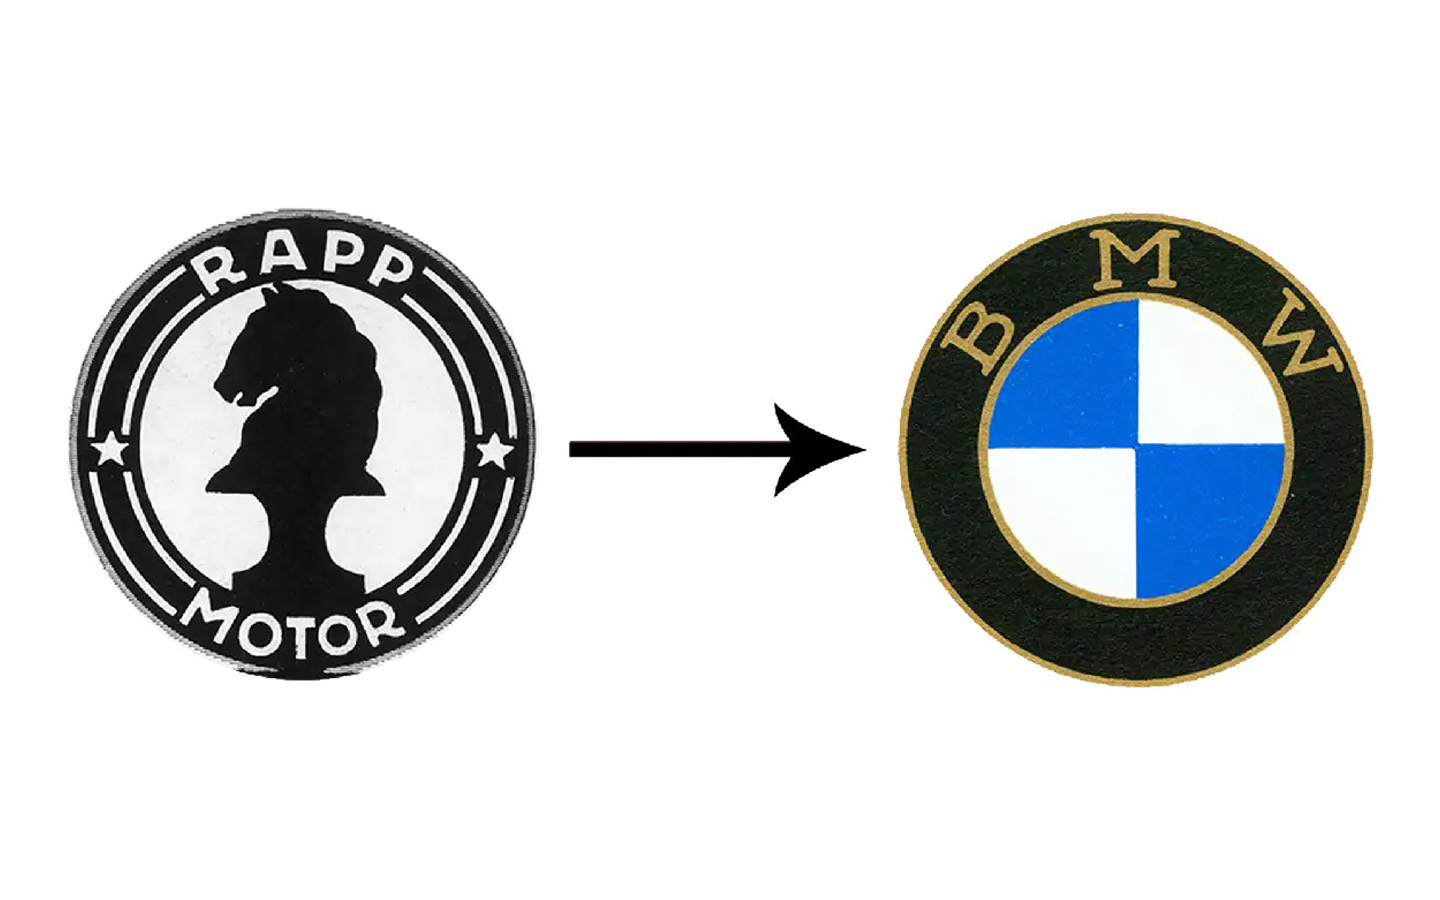 bmw logo with rapp motorenwerke logo